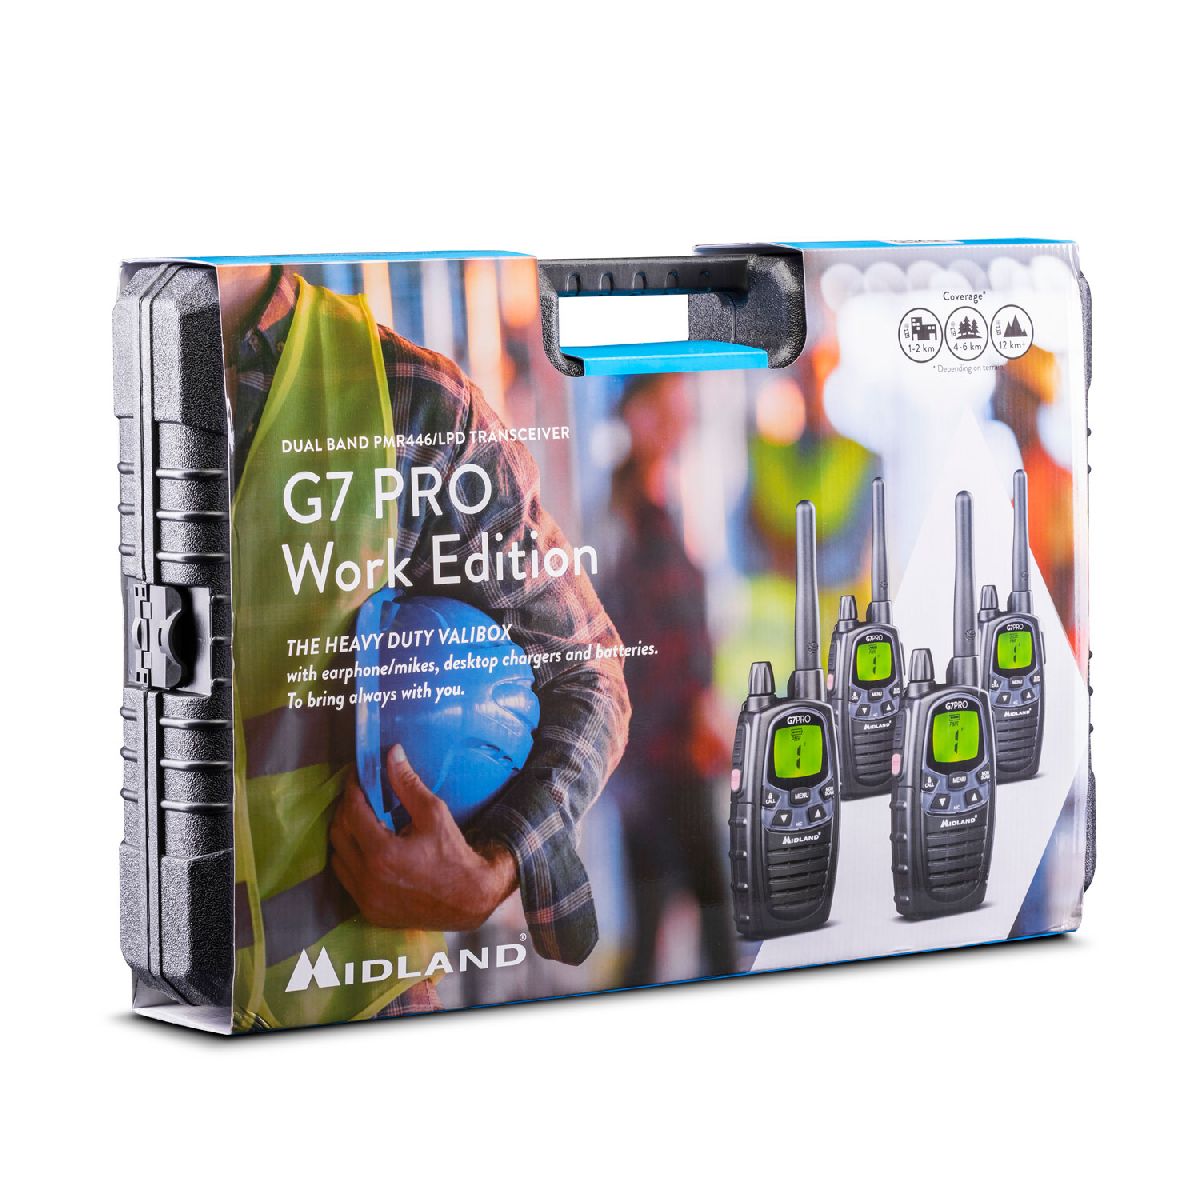 G7Pro Twin PMR/LPD Handfunkgert 4er Set Work Edition